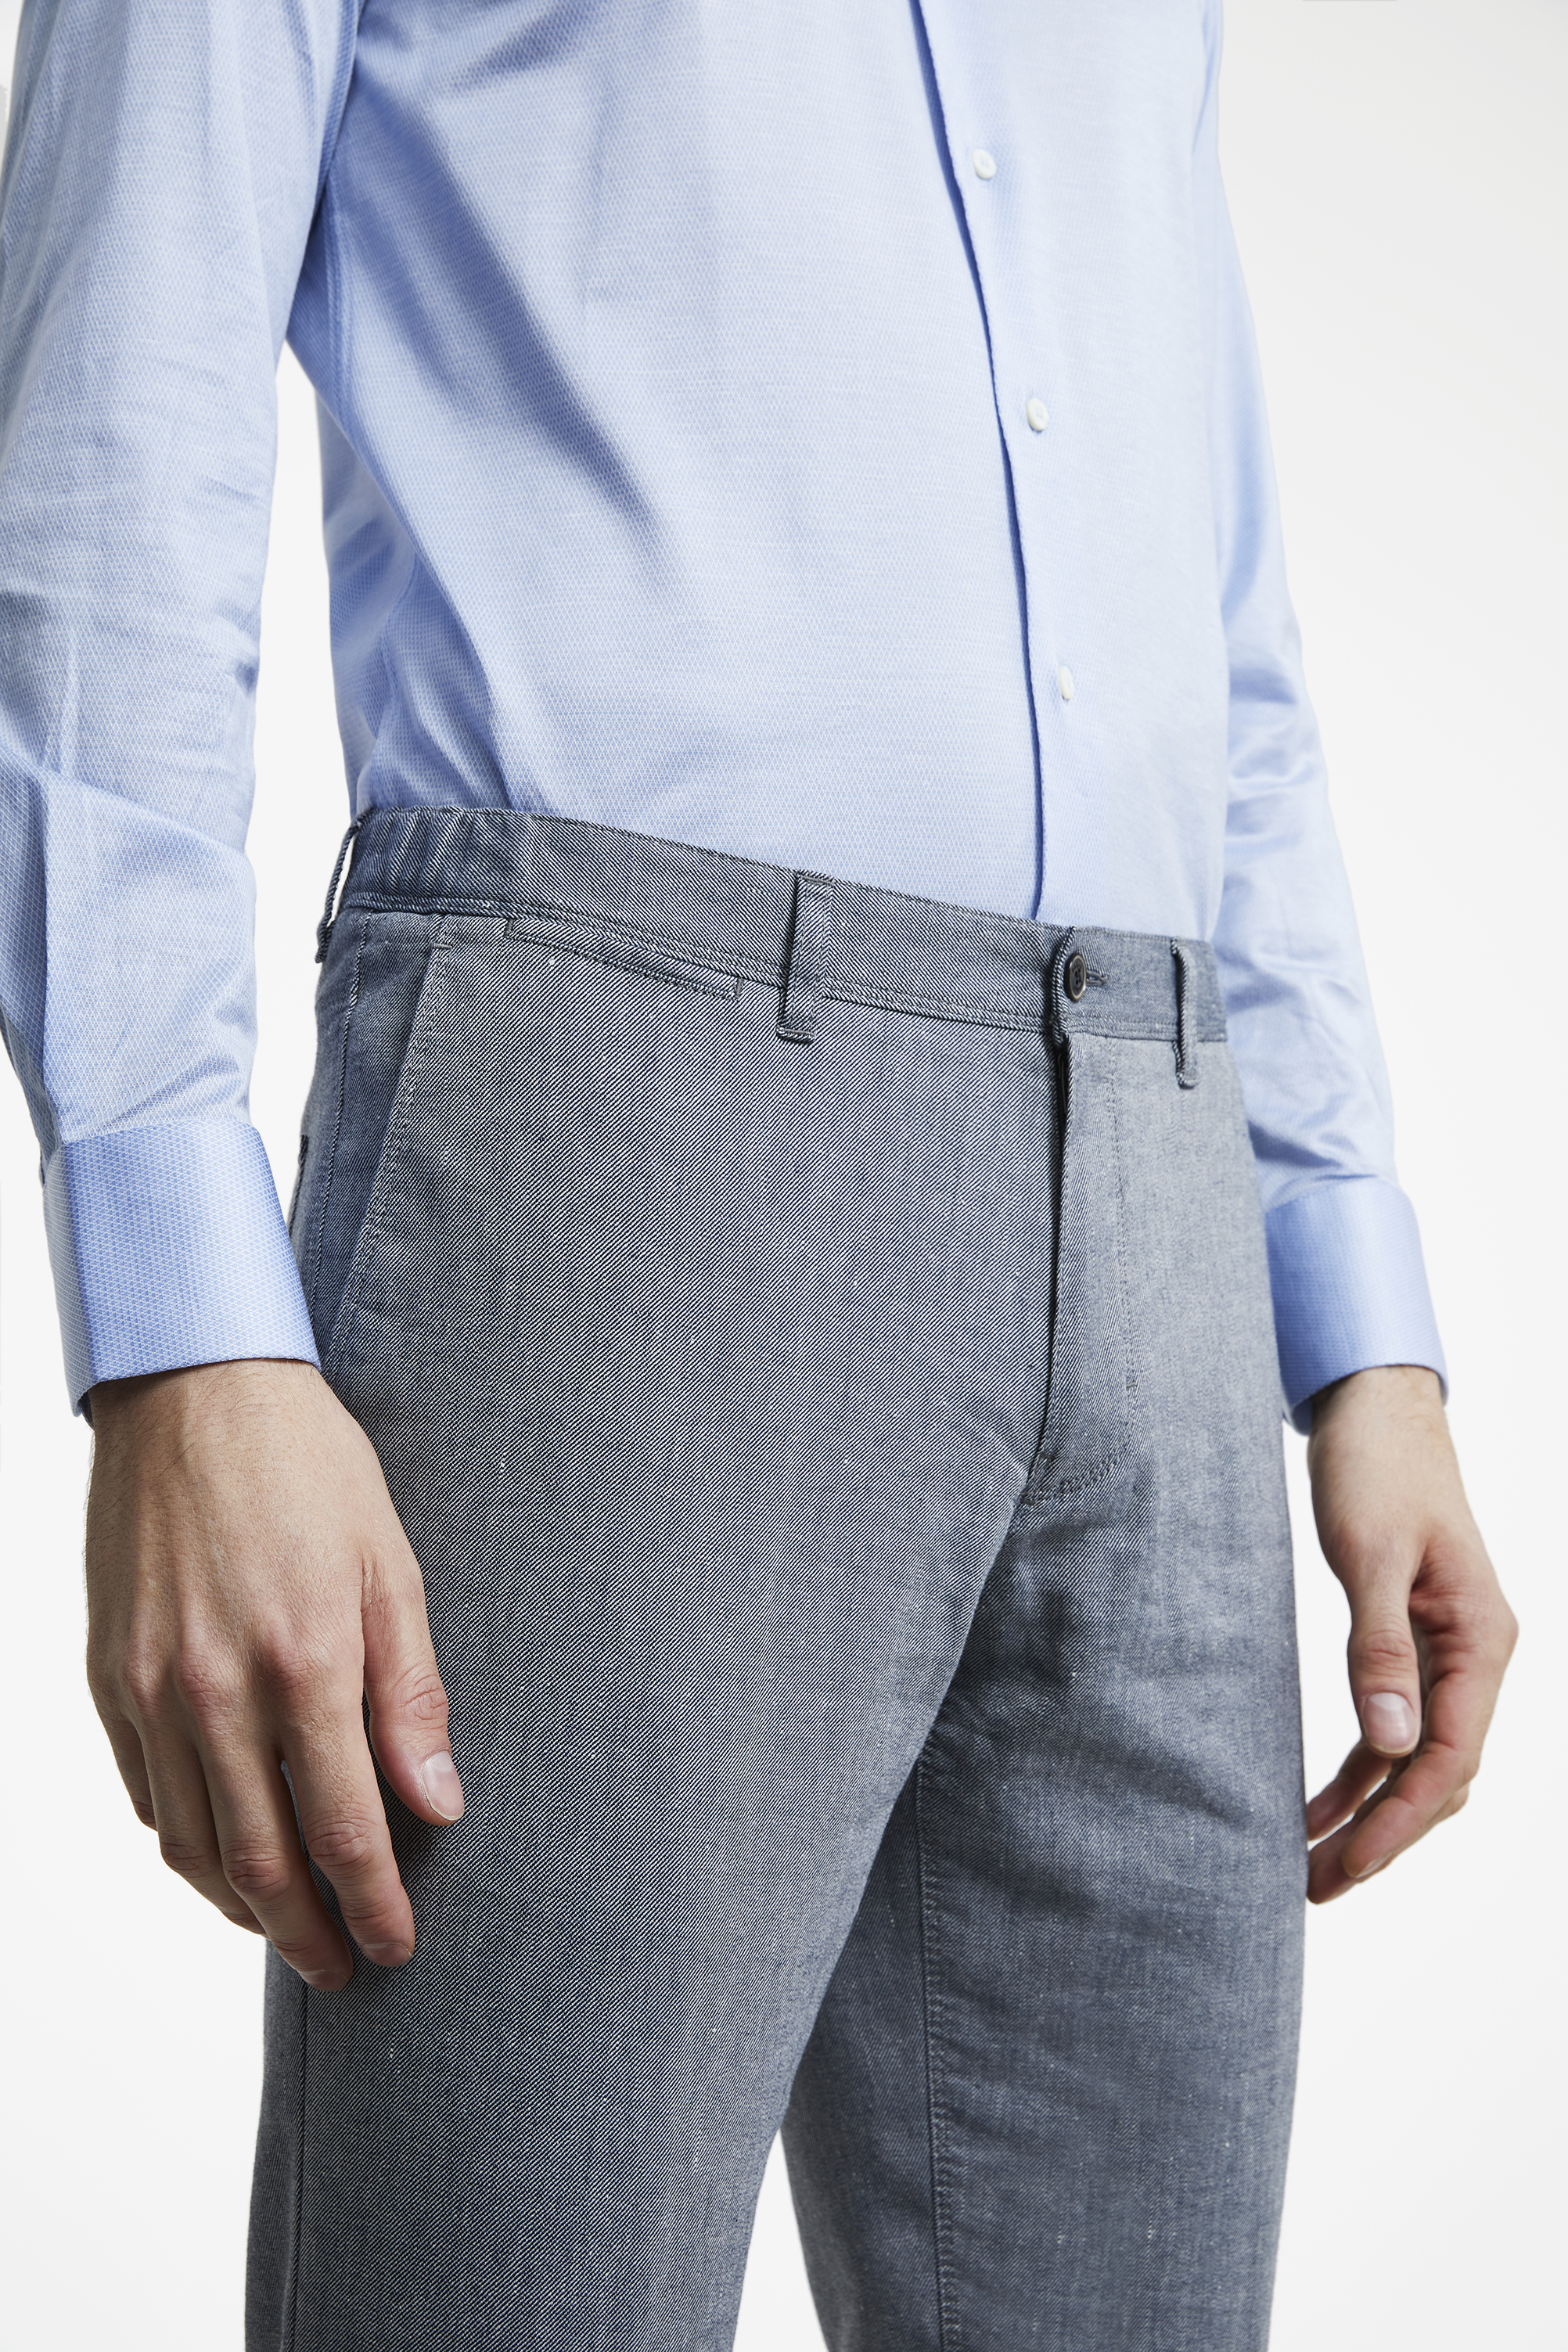 Damat Tween Damat Slim Fit Mavi Chino Pantolon. 1